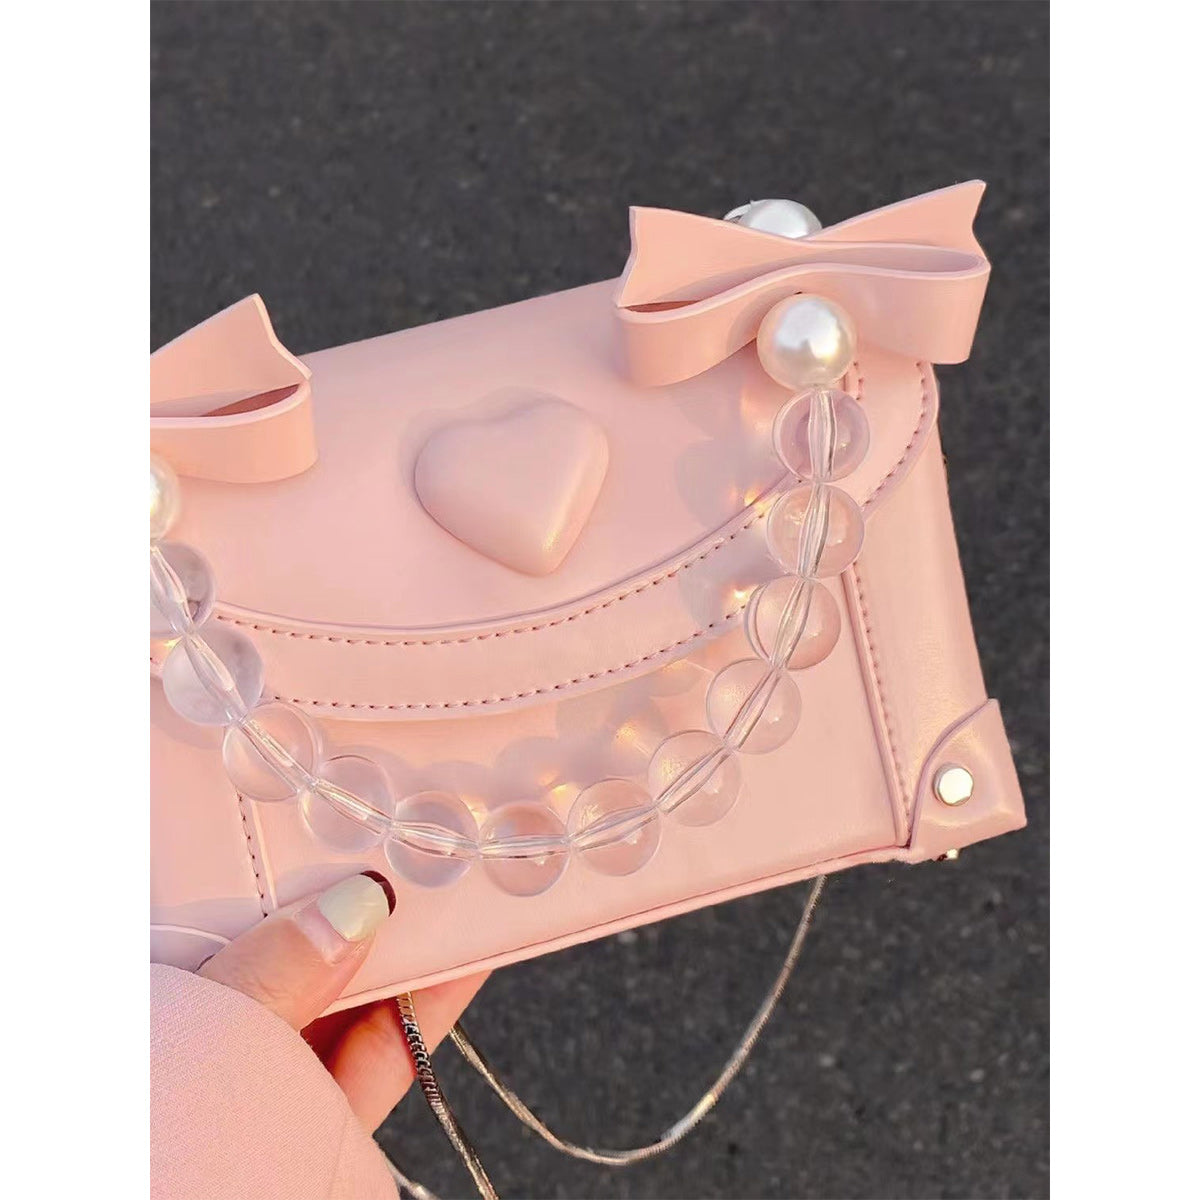 Minority Sweet Summer Versatile Pink Heart Crystal Box Bag Pearl Chain Portable Messenger Bag - Jam Garden